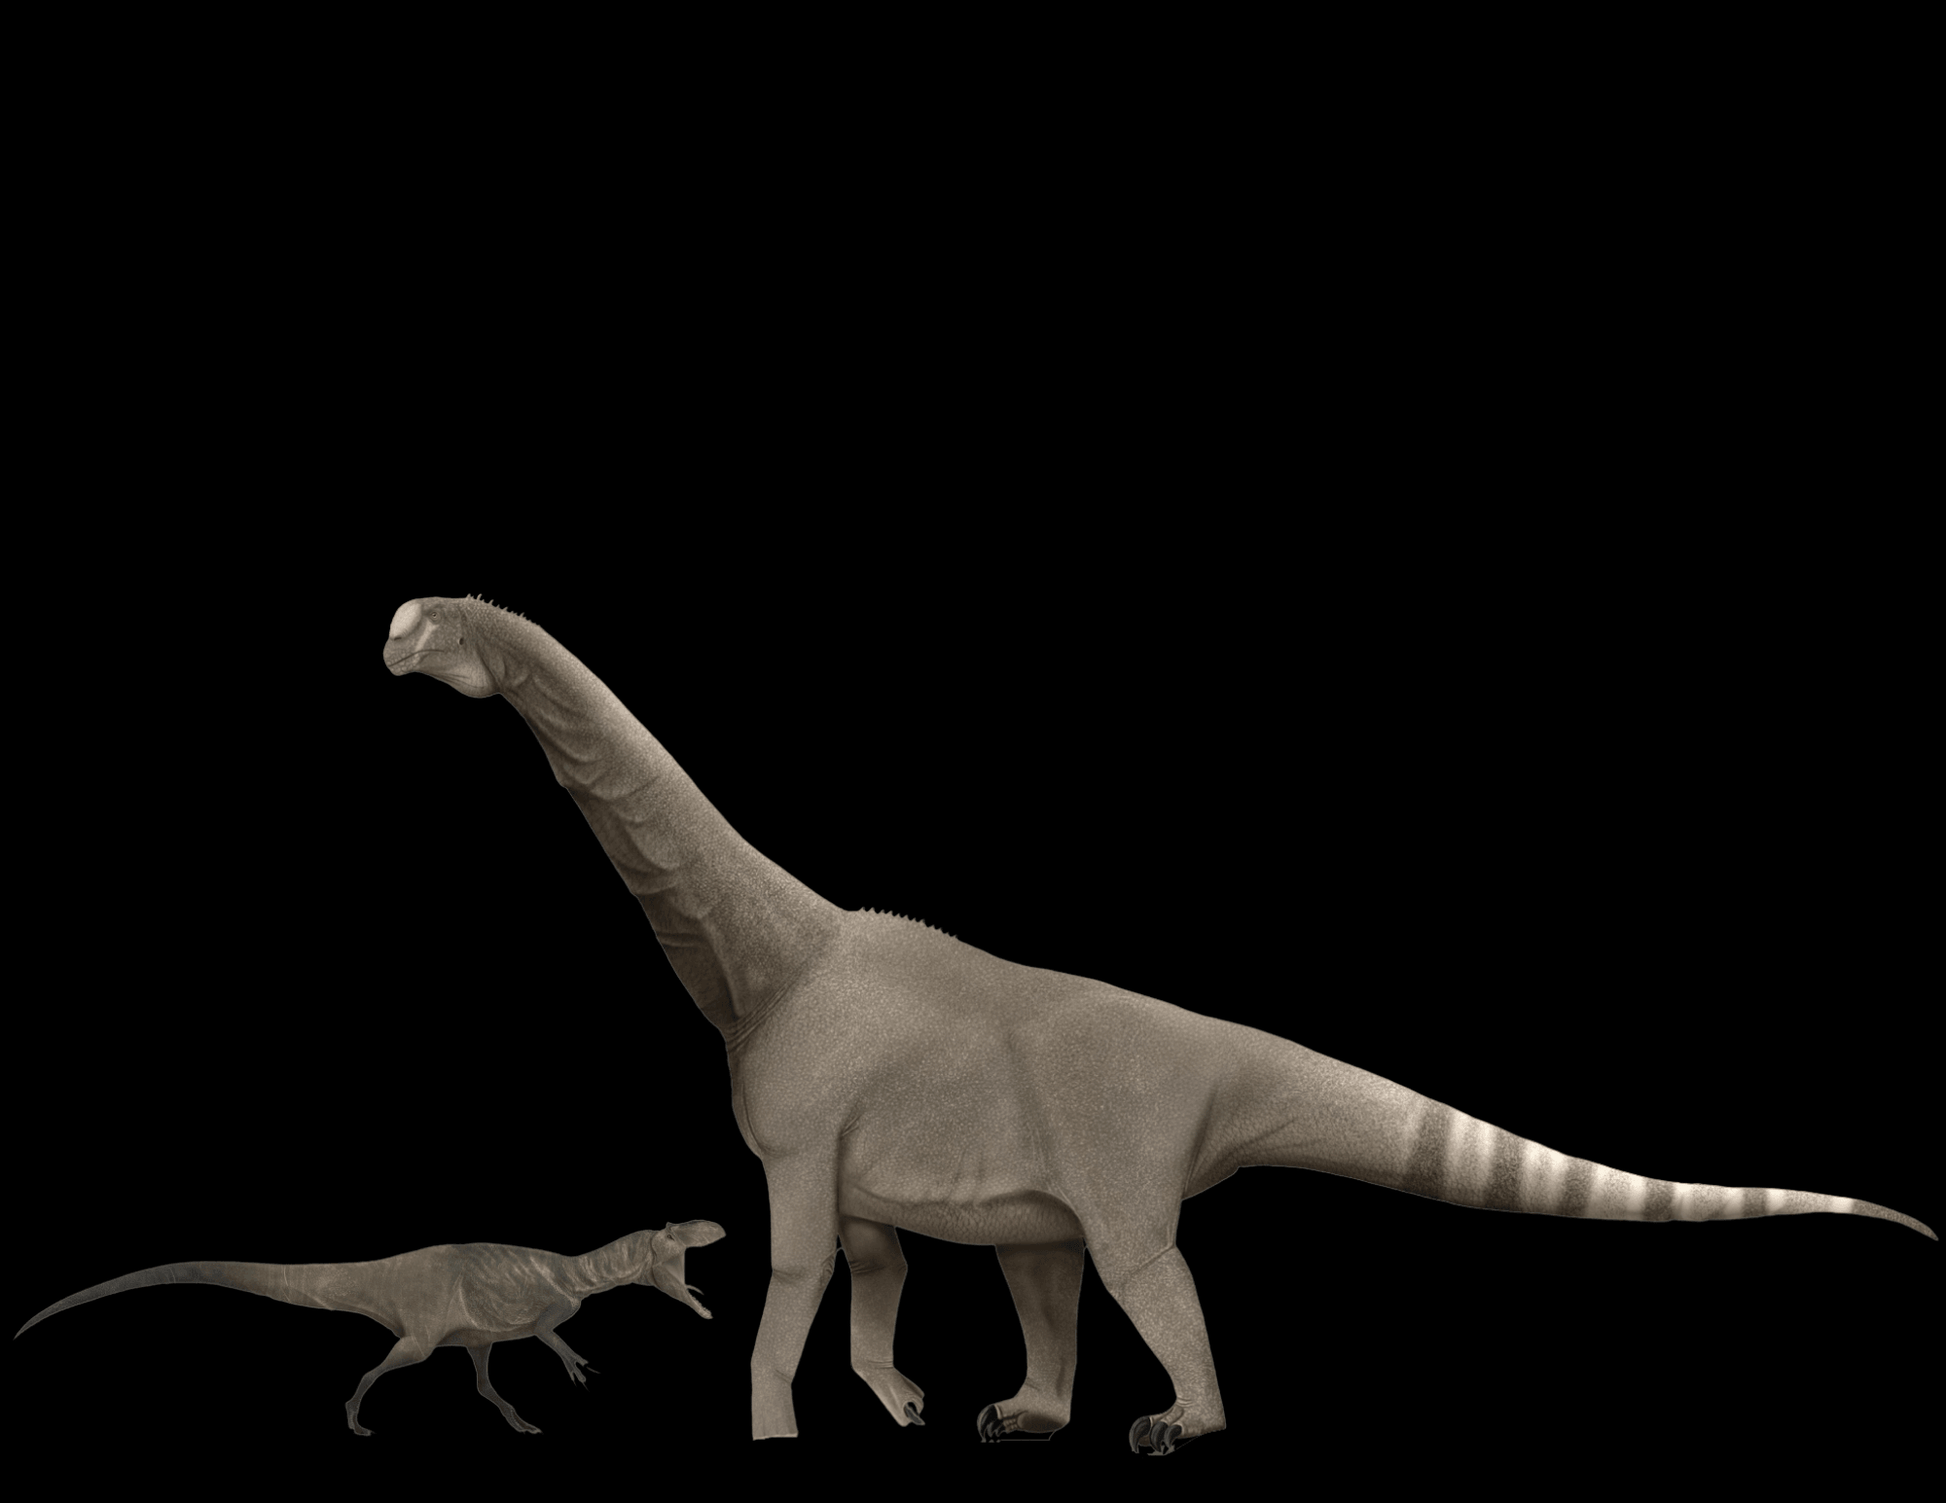 Allosaurus vs Camarasaurus - Jurassic Giants! - Fossil Crates Dinosaur teeth and claw cast